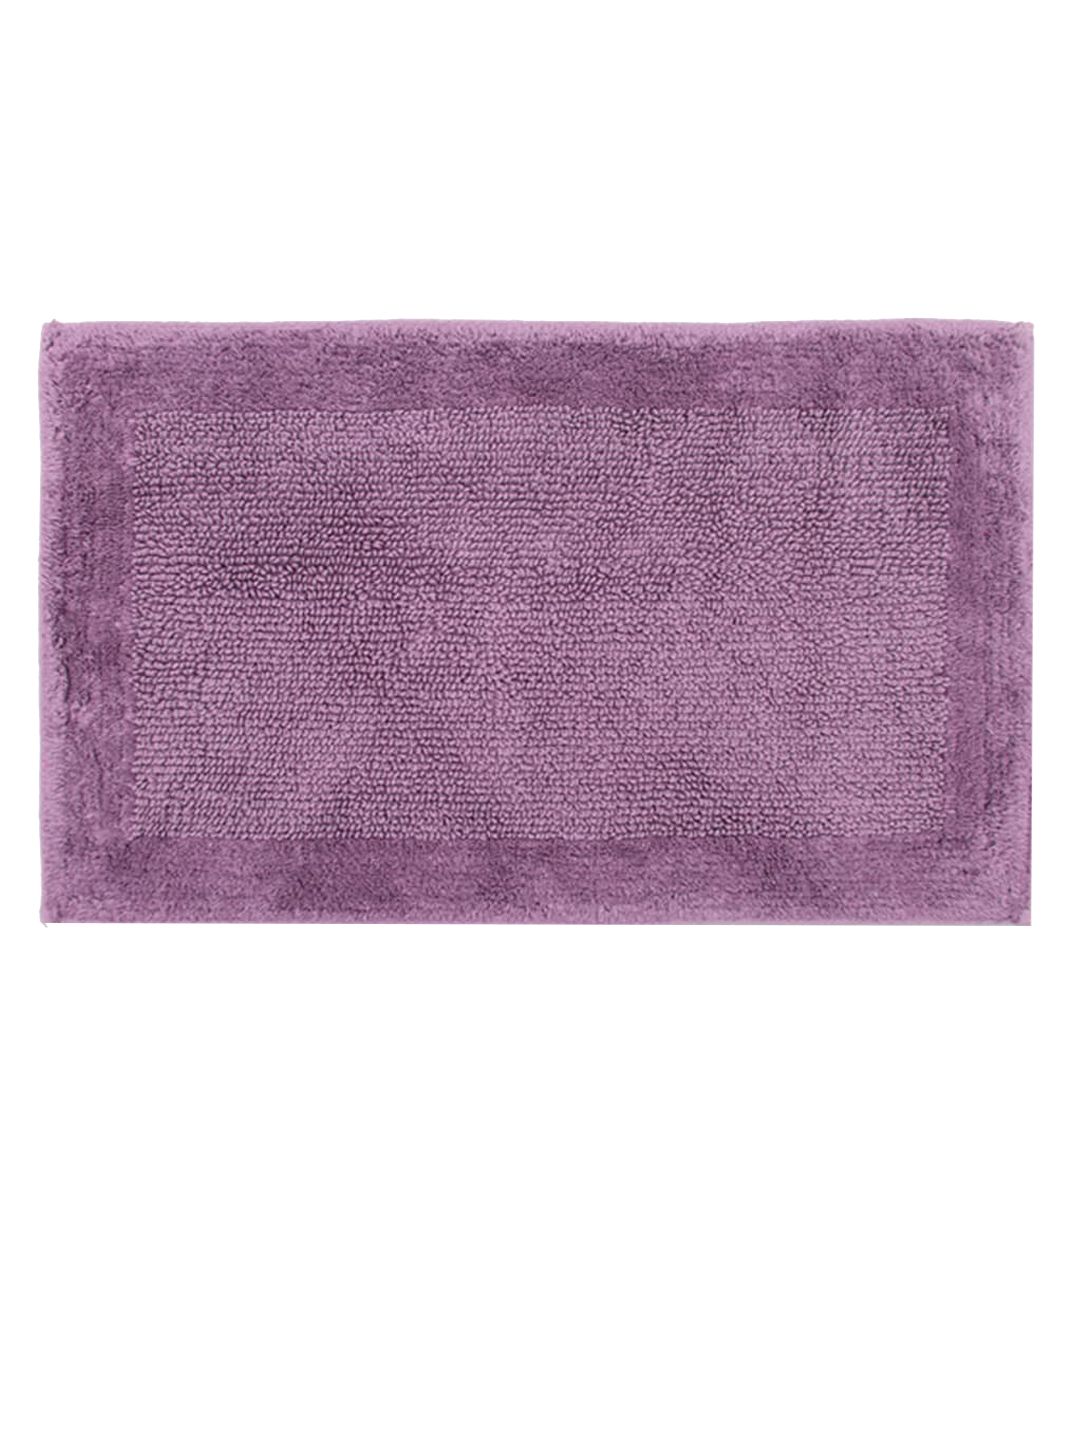 AVI Living Purple Solid Cotton 1850 GSM Bath Rugs Price in India